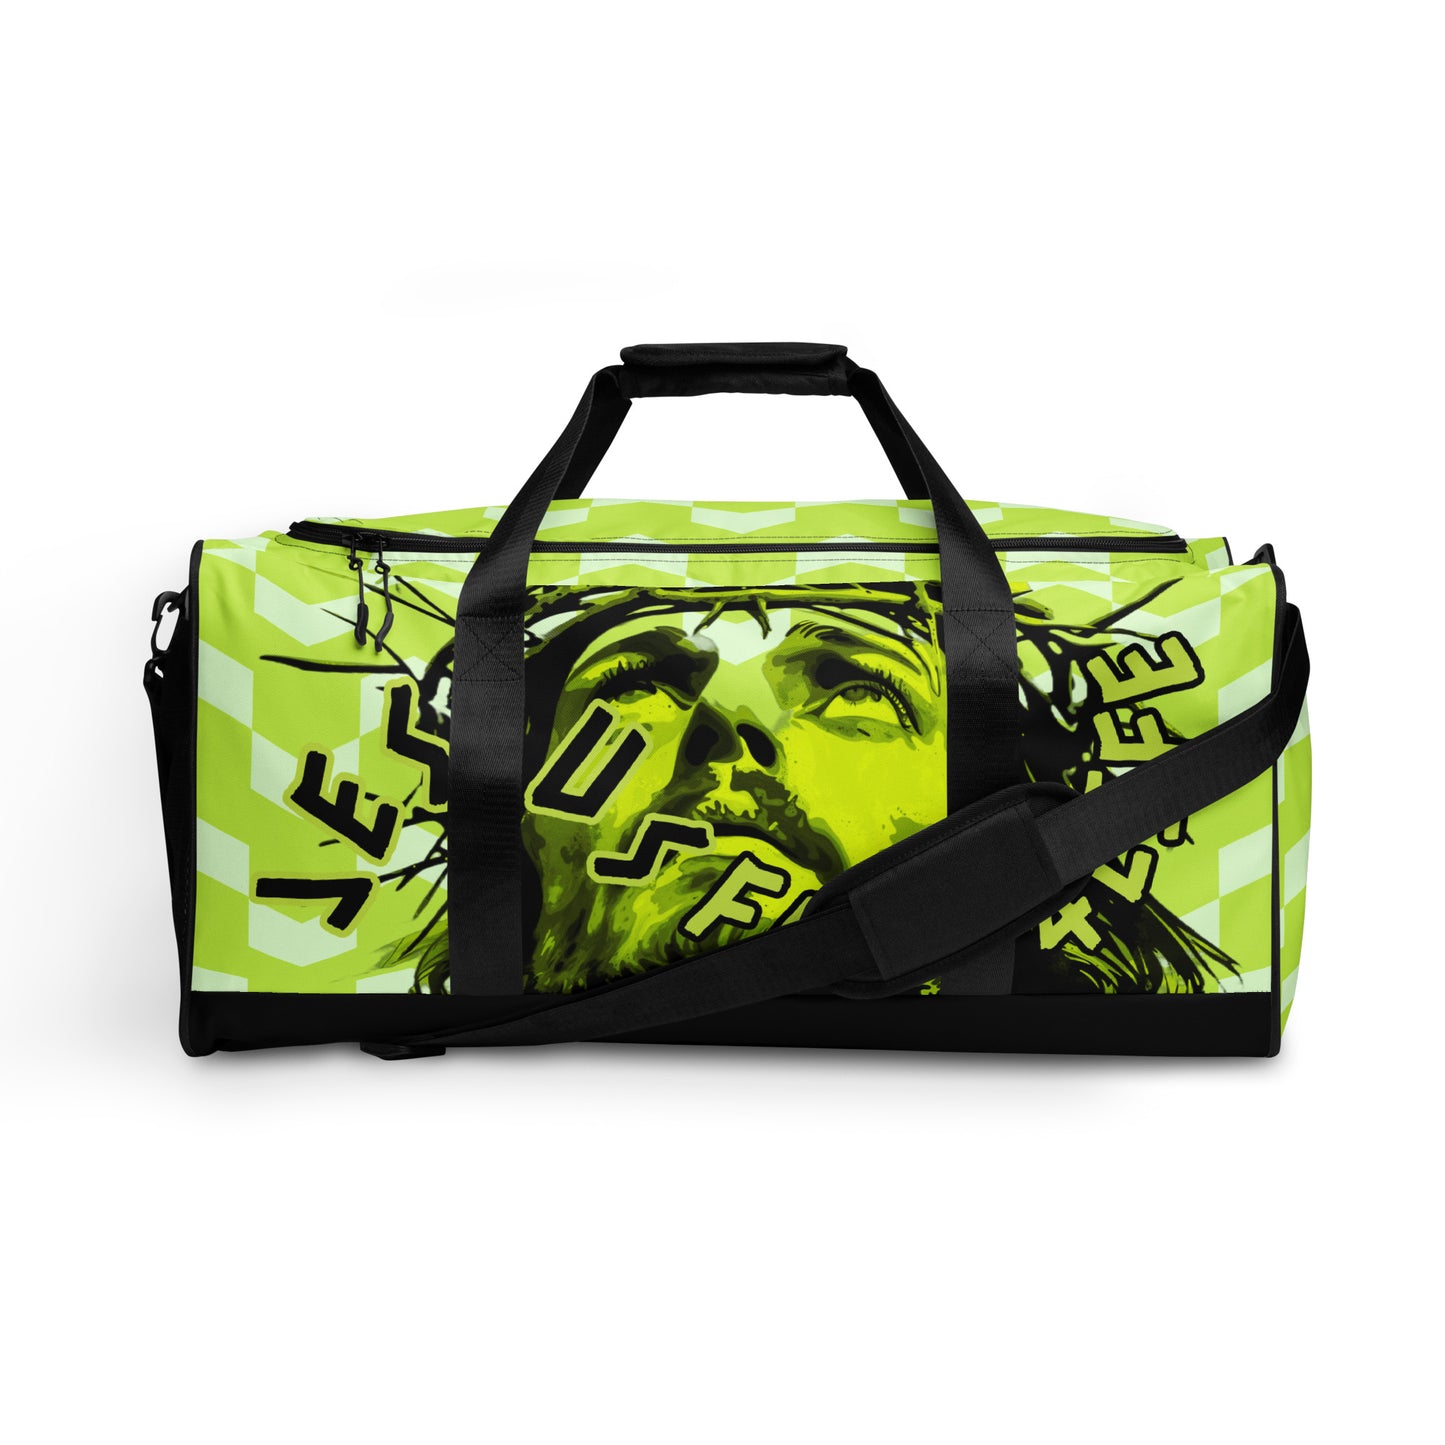 Jesus Fan 4Life- Duffle bag